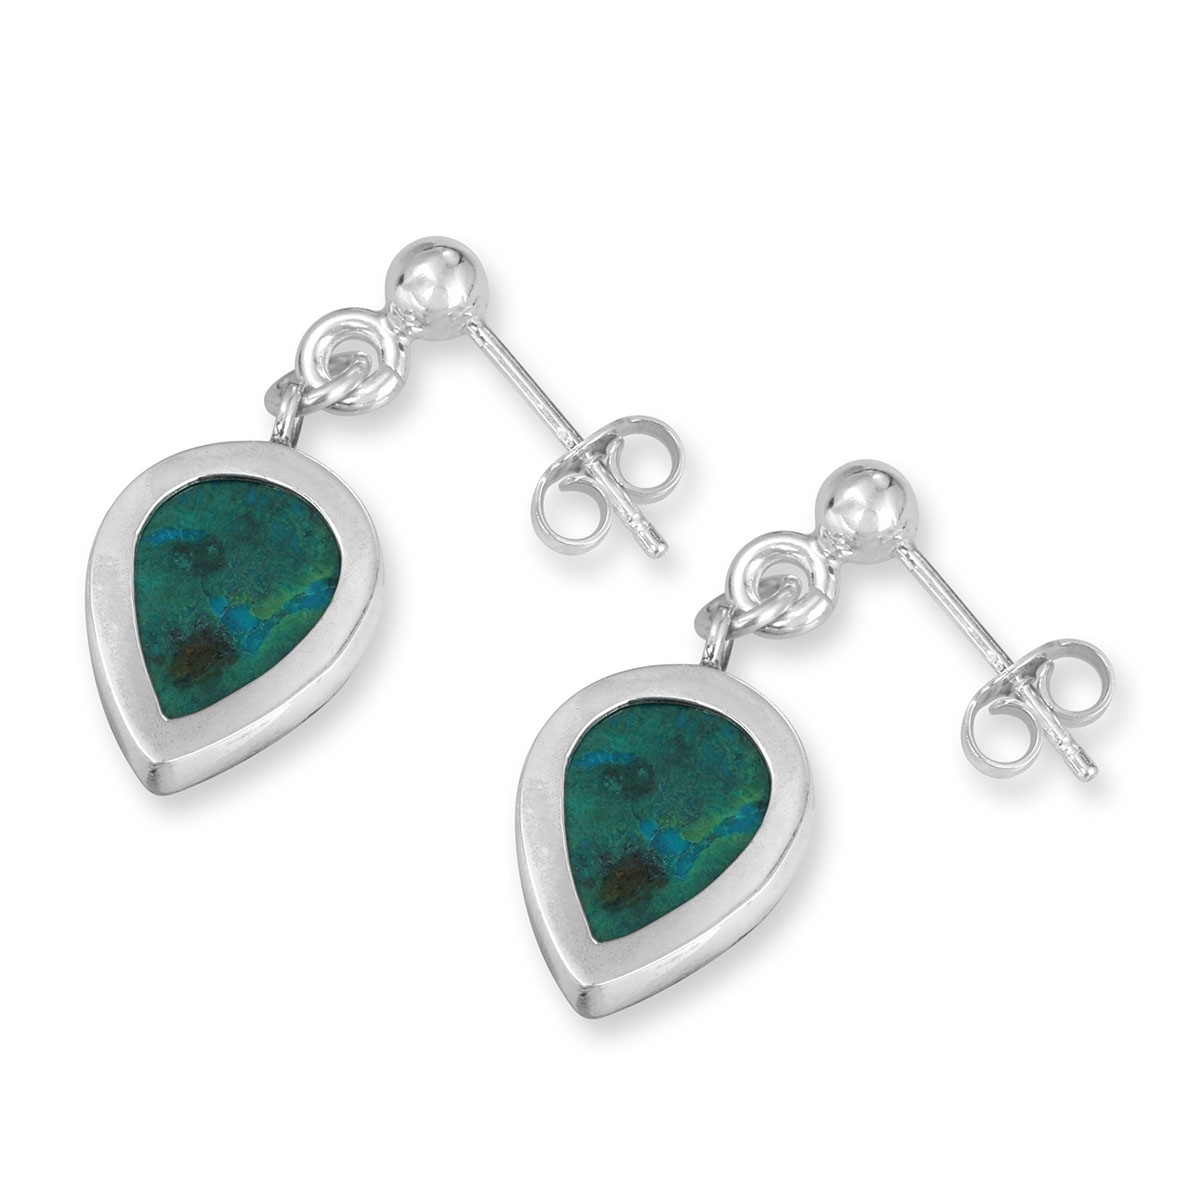 Rafael Jewelry Eilat Stone and Silver Clove Earrings - 1